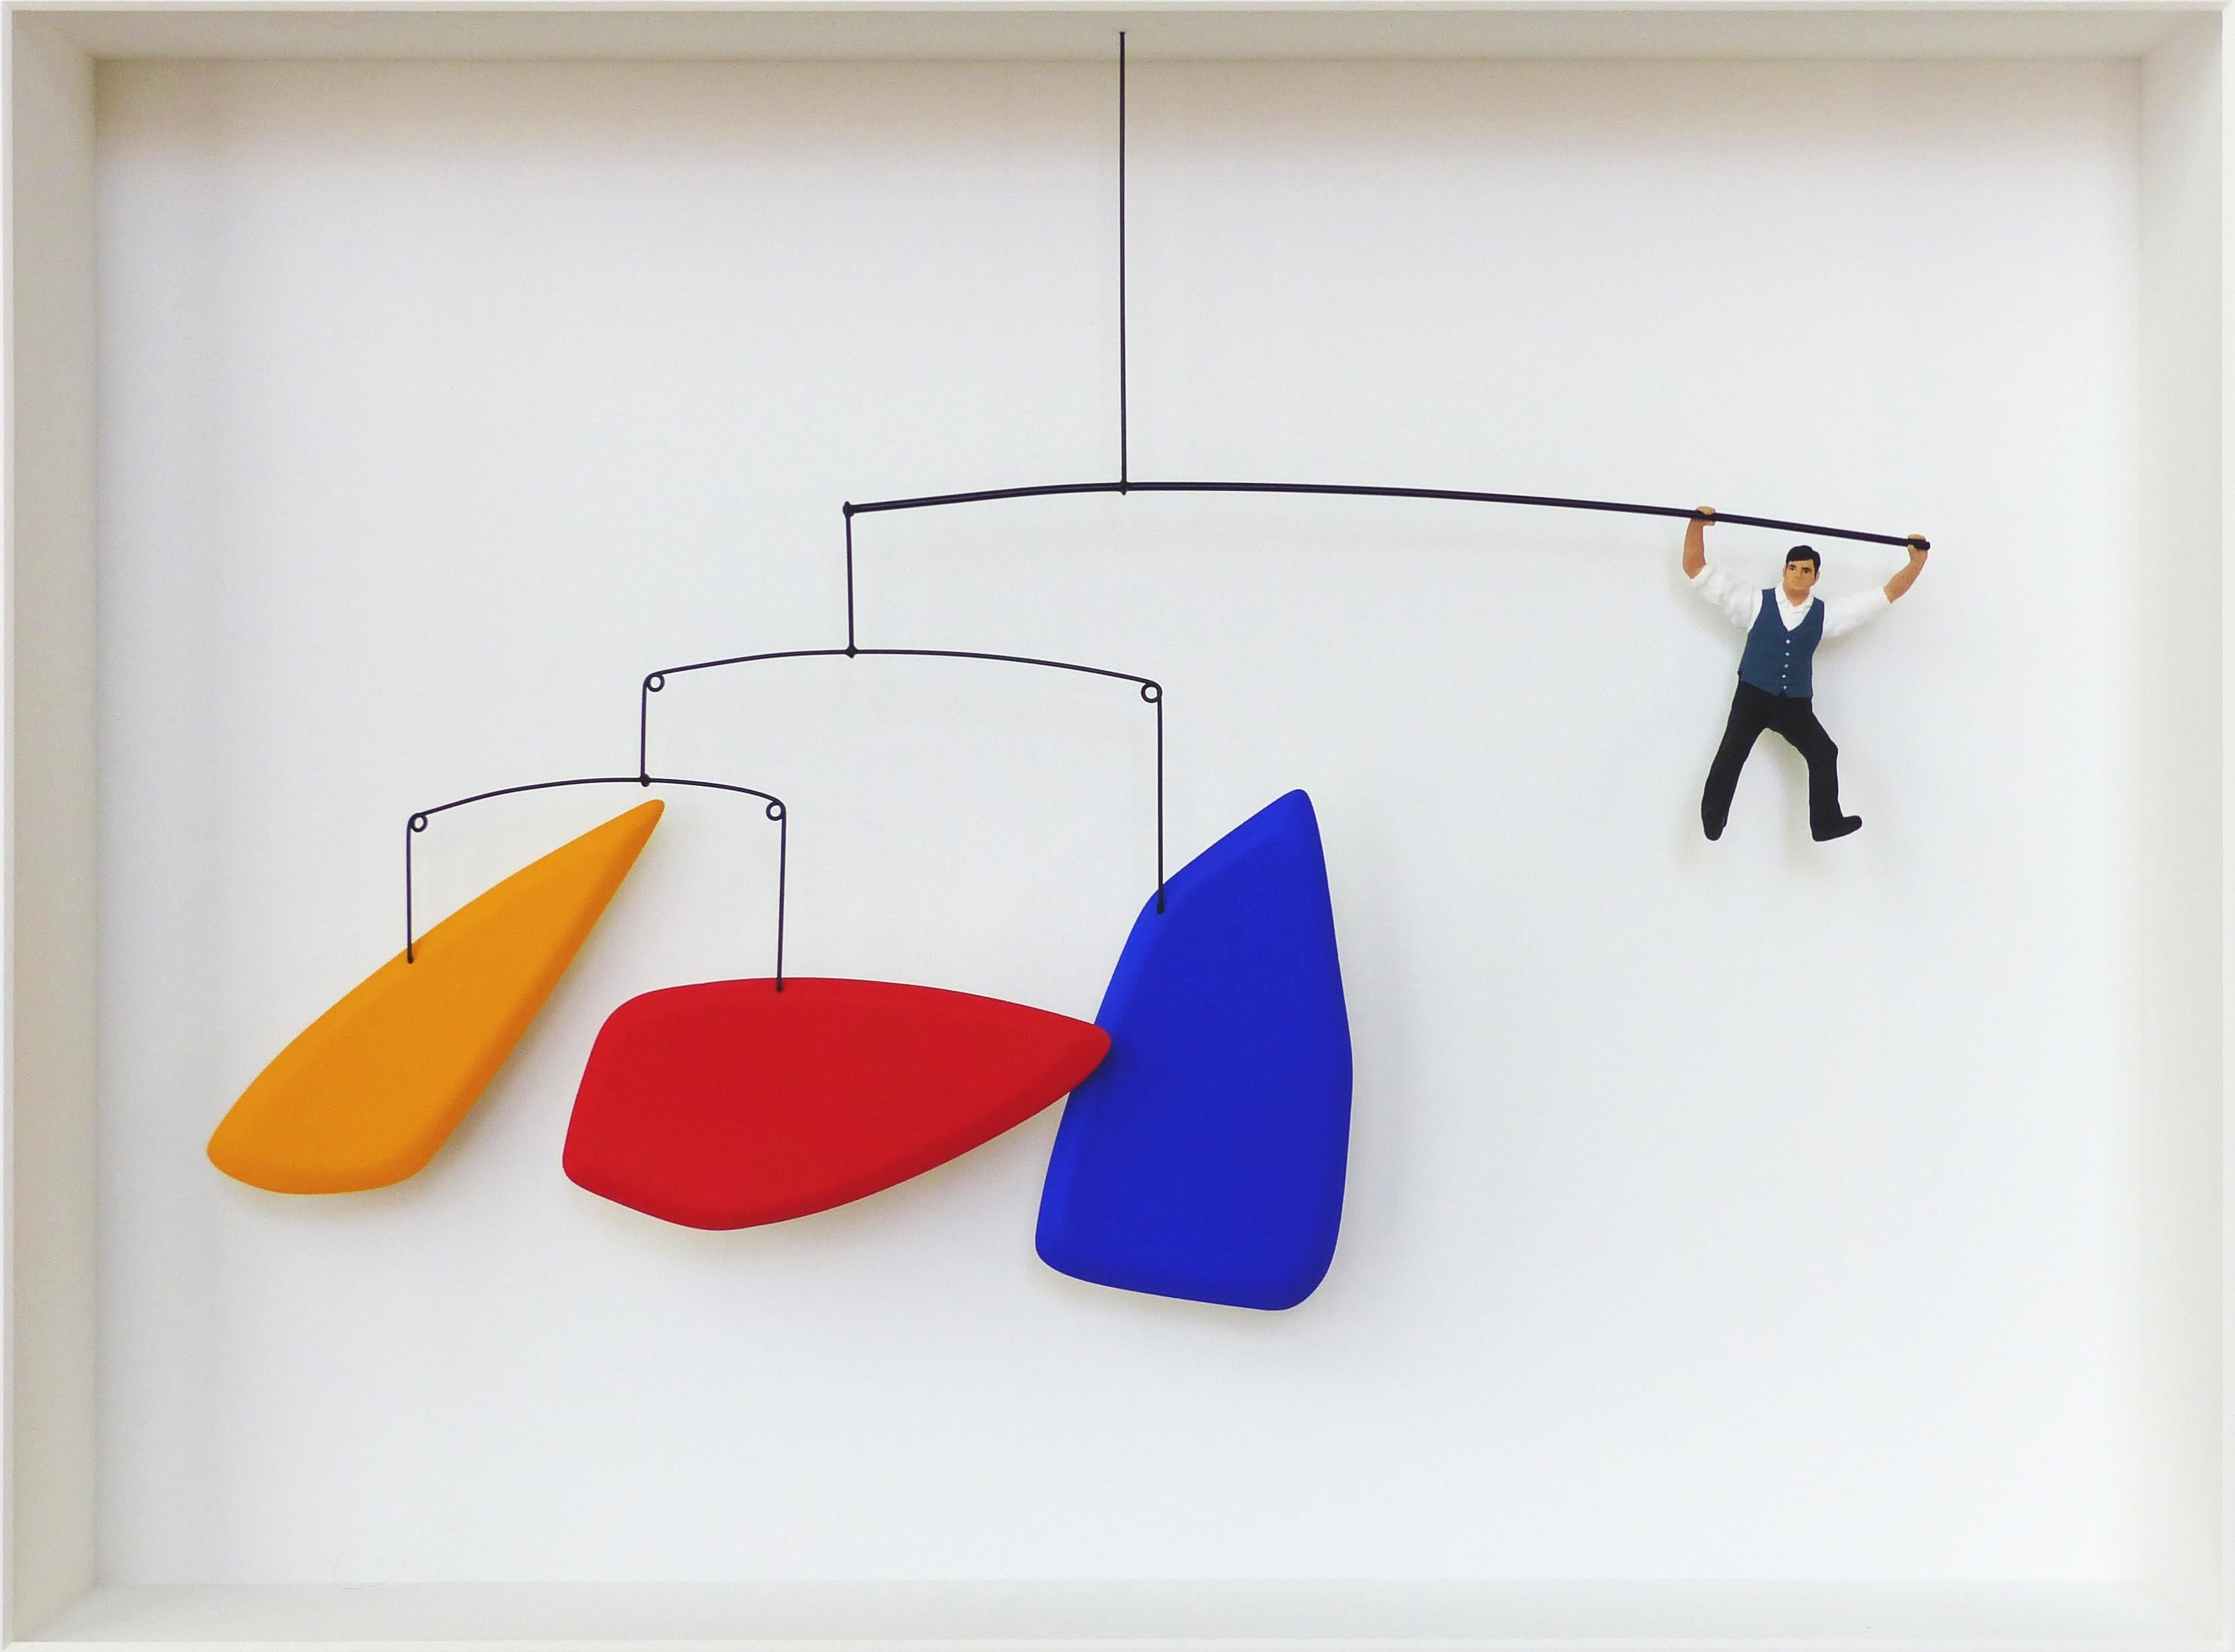 Homage to Calder - contemporary art work, design tribute to Alexander Calder  - Mixed Media Art by Volker Kuhn